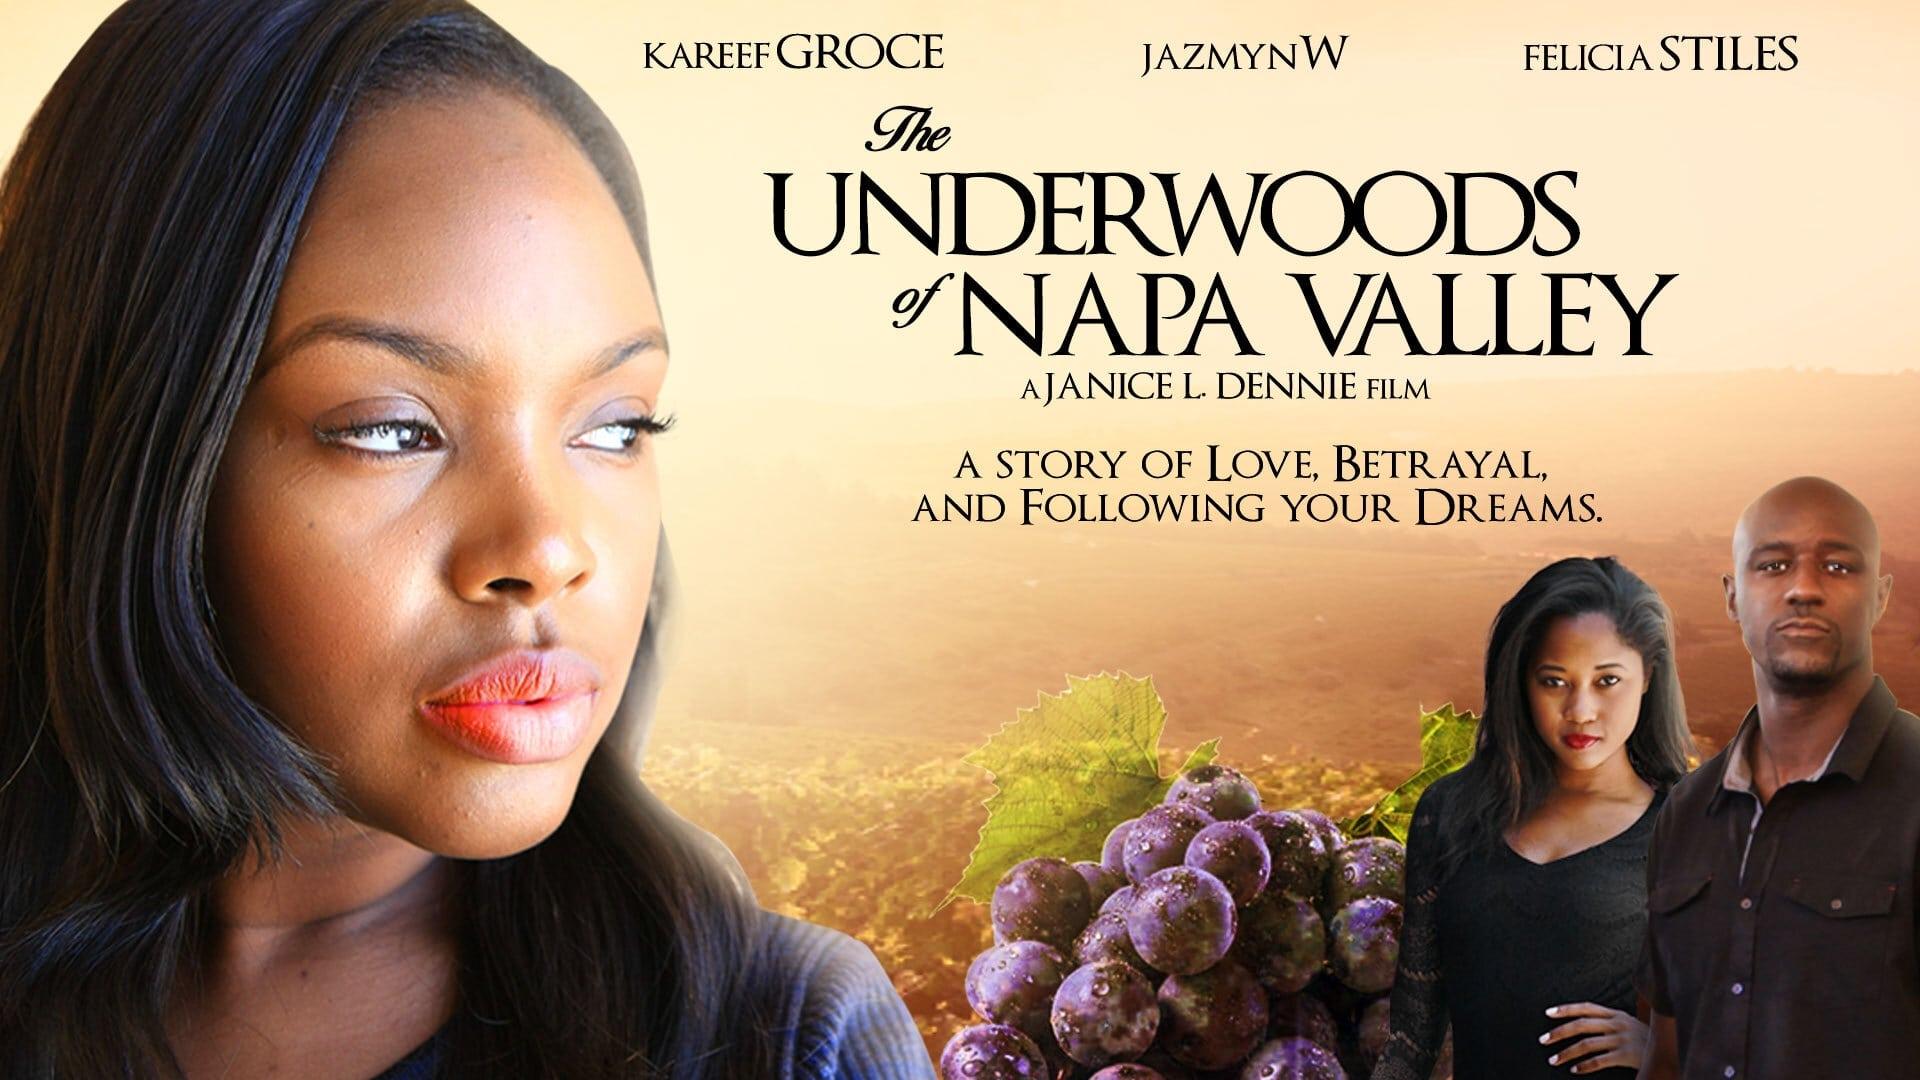 The Underwoods of Napa Valley backdrop